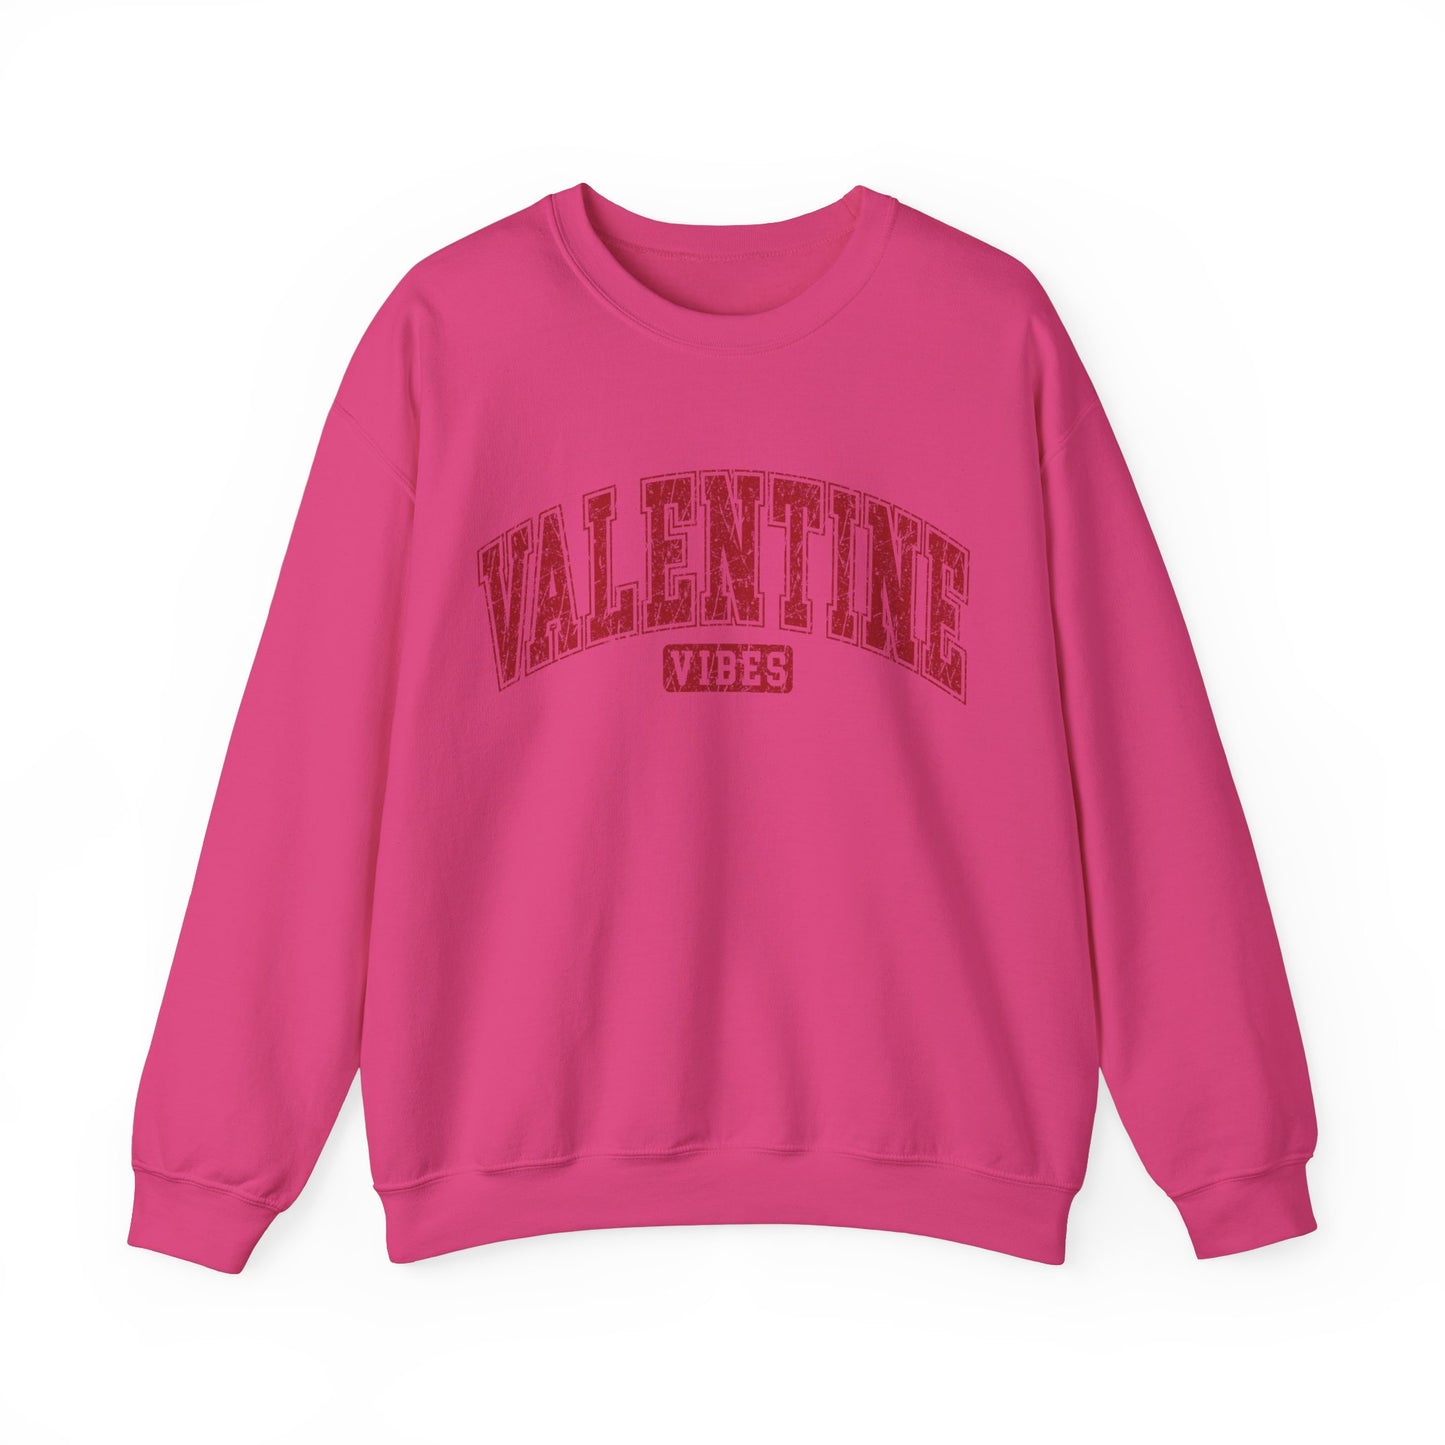 Valentine Vibes Women's Sweatshirt